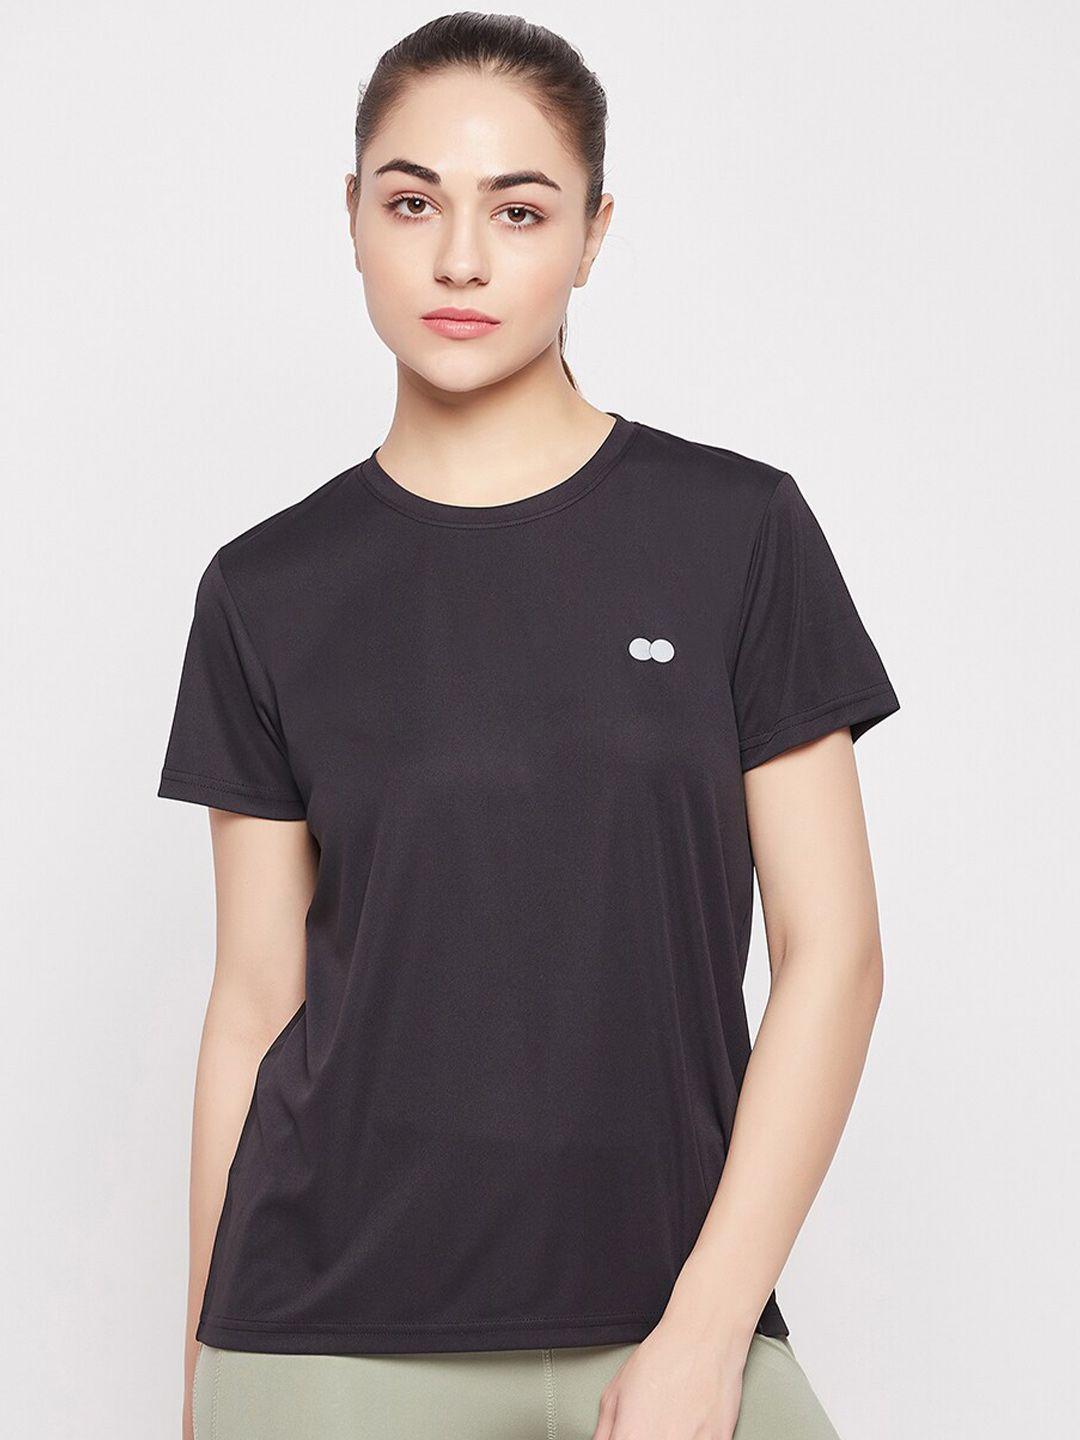 clovia-black-round-neck-comfort-fit-t-shirt